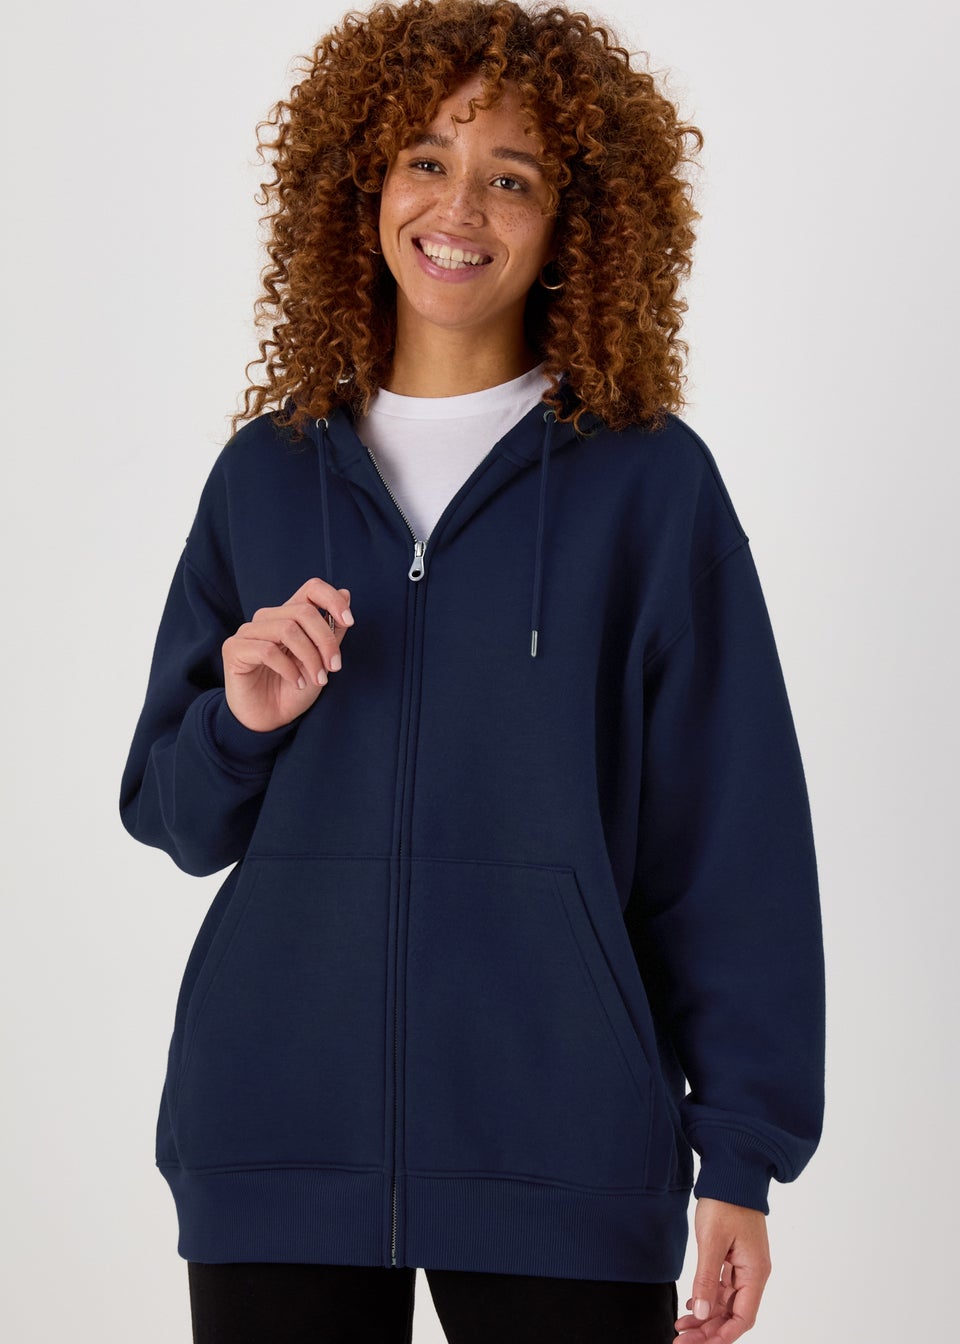 Love & Sports Women's Fleece Cropped Quarter Zip Pullover